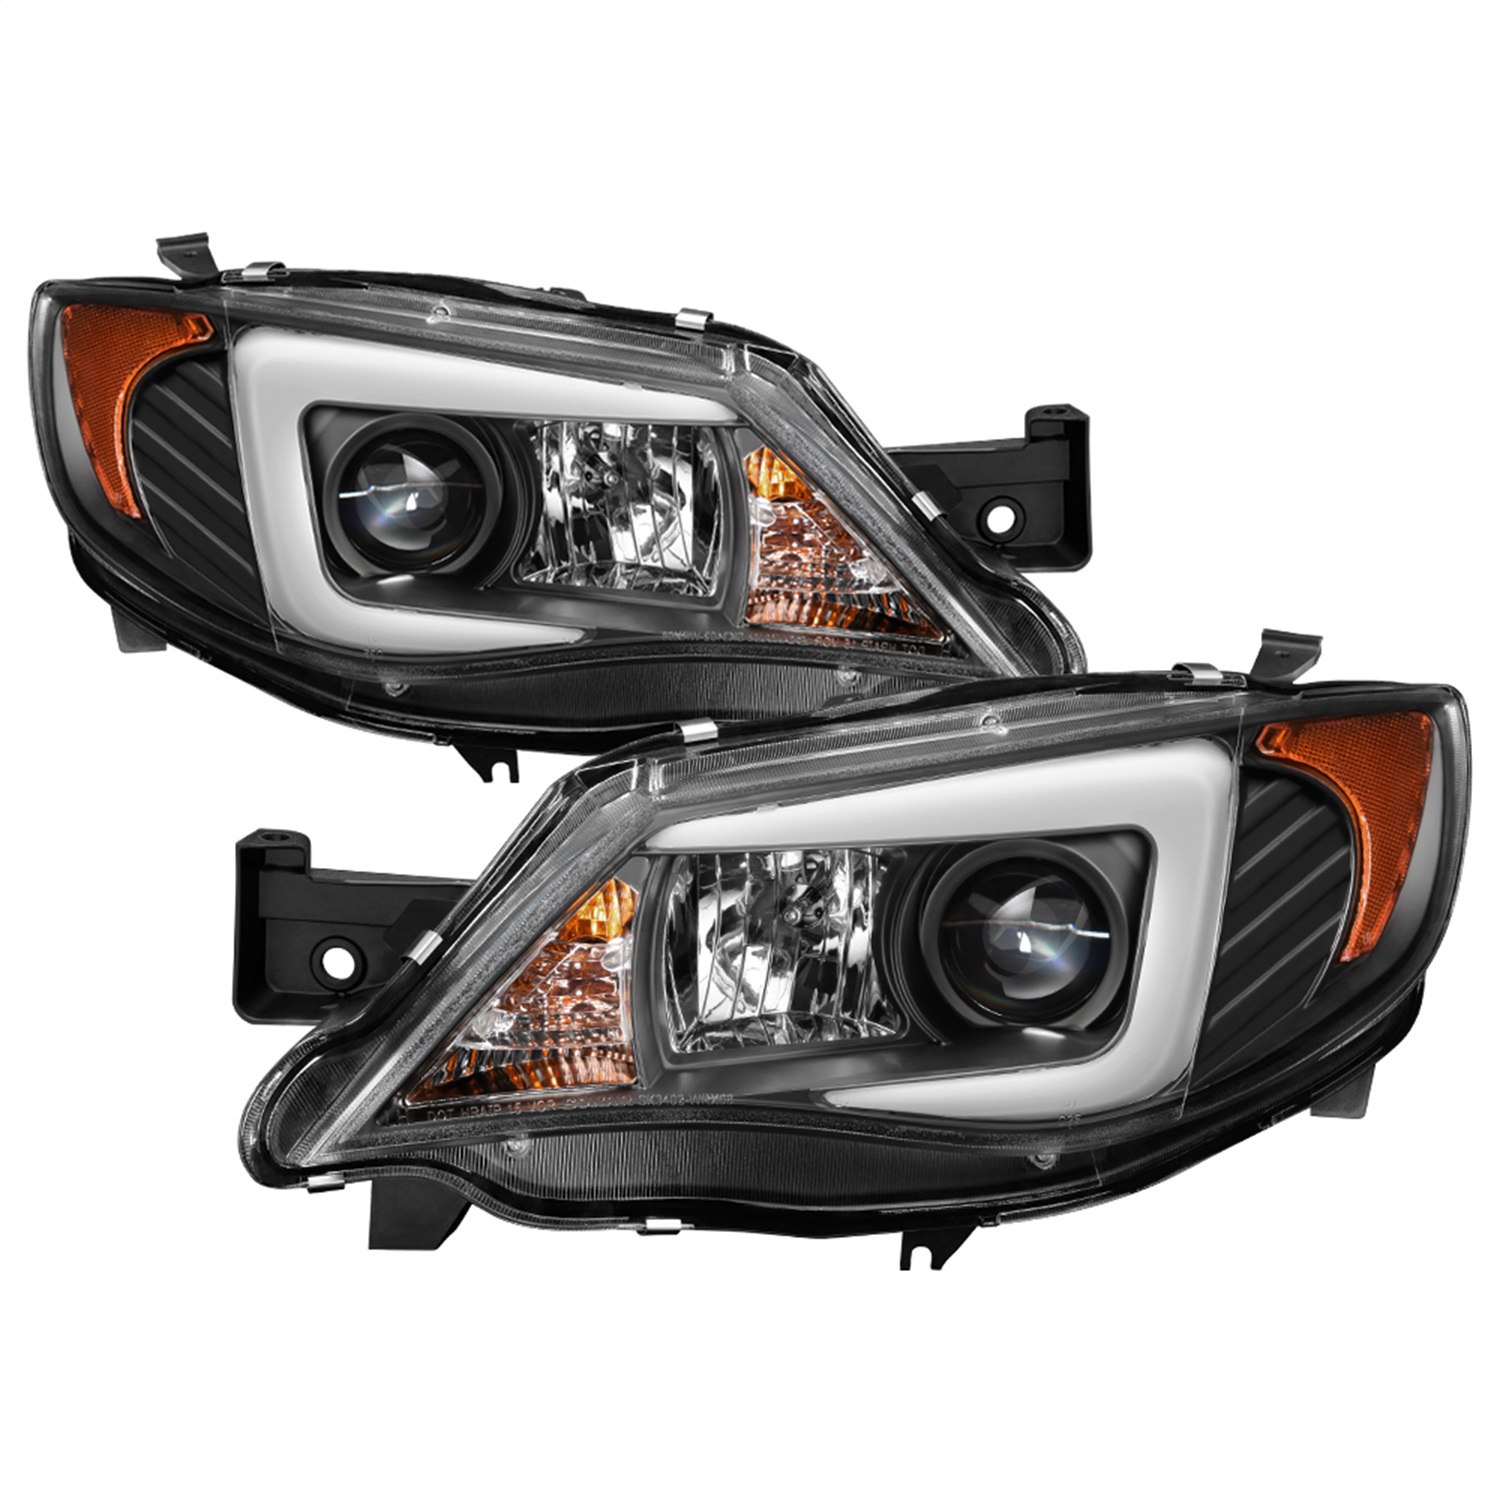 Spyder Auto 5083944 Halo DRL LED Projector Headlight Fits 08-14 Impreza